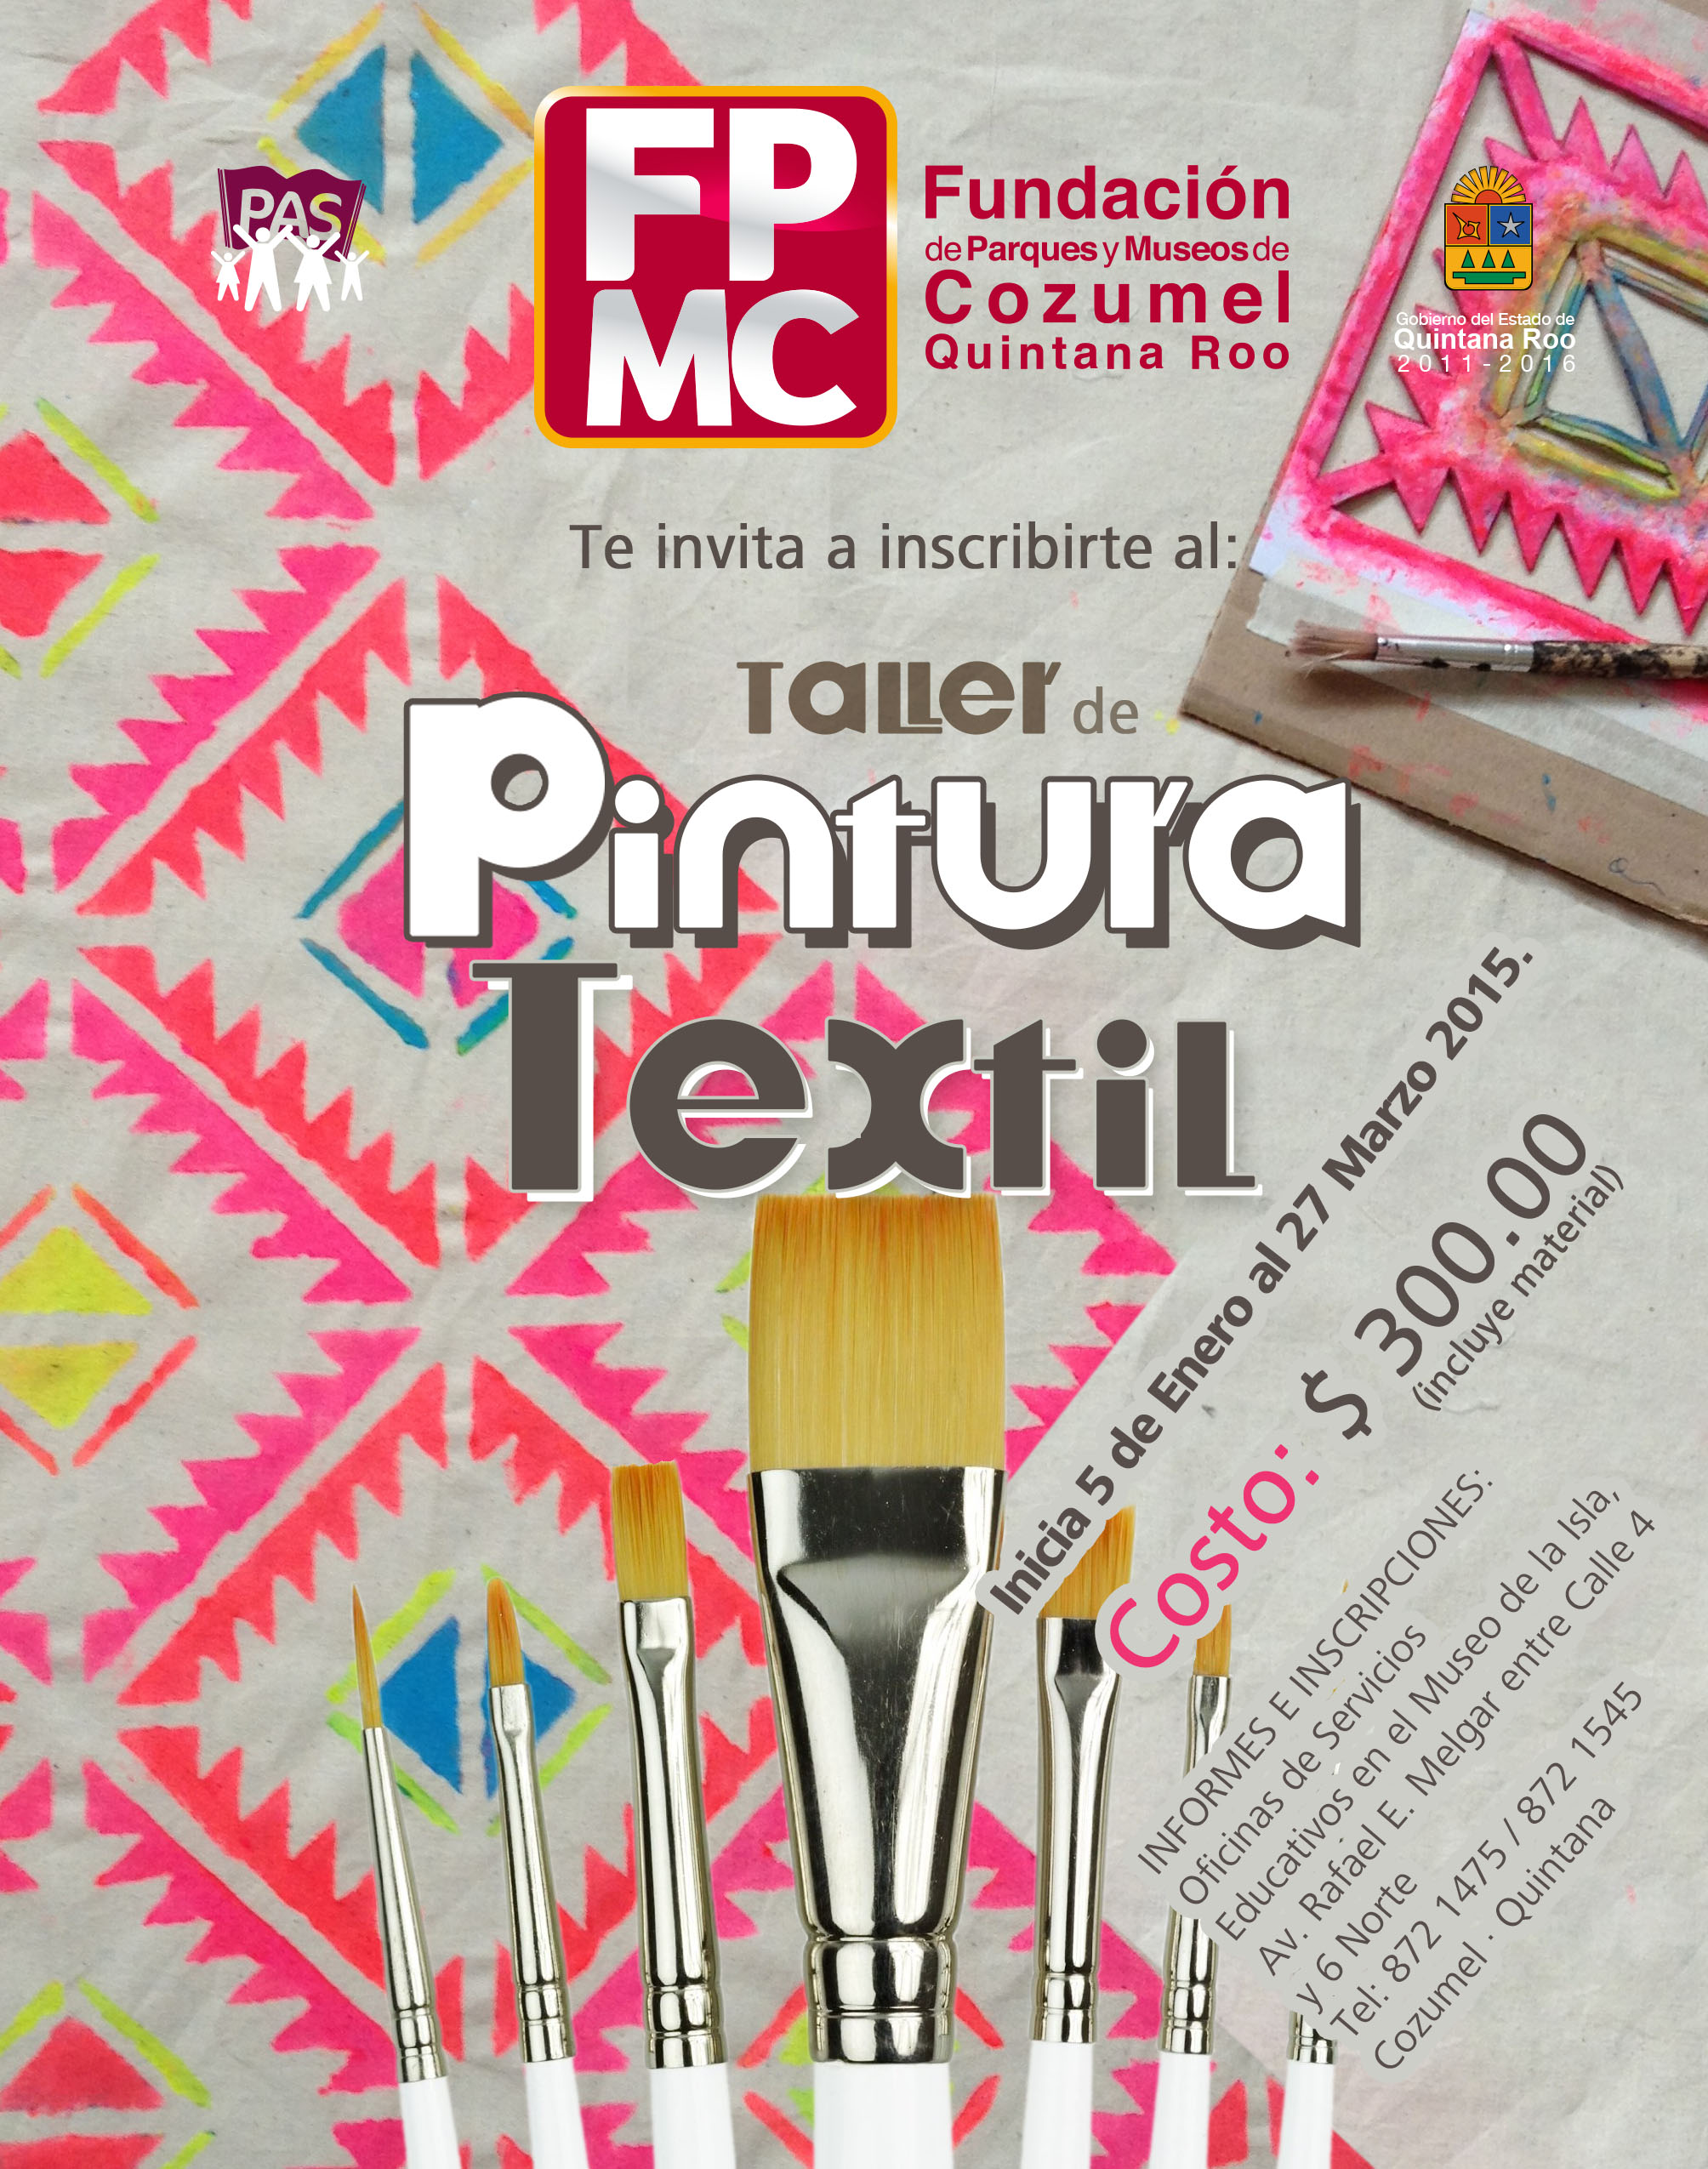 mxsmmdlidc/Pintura Textil2015.jpg